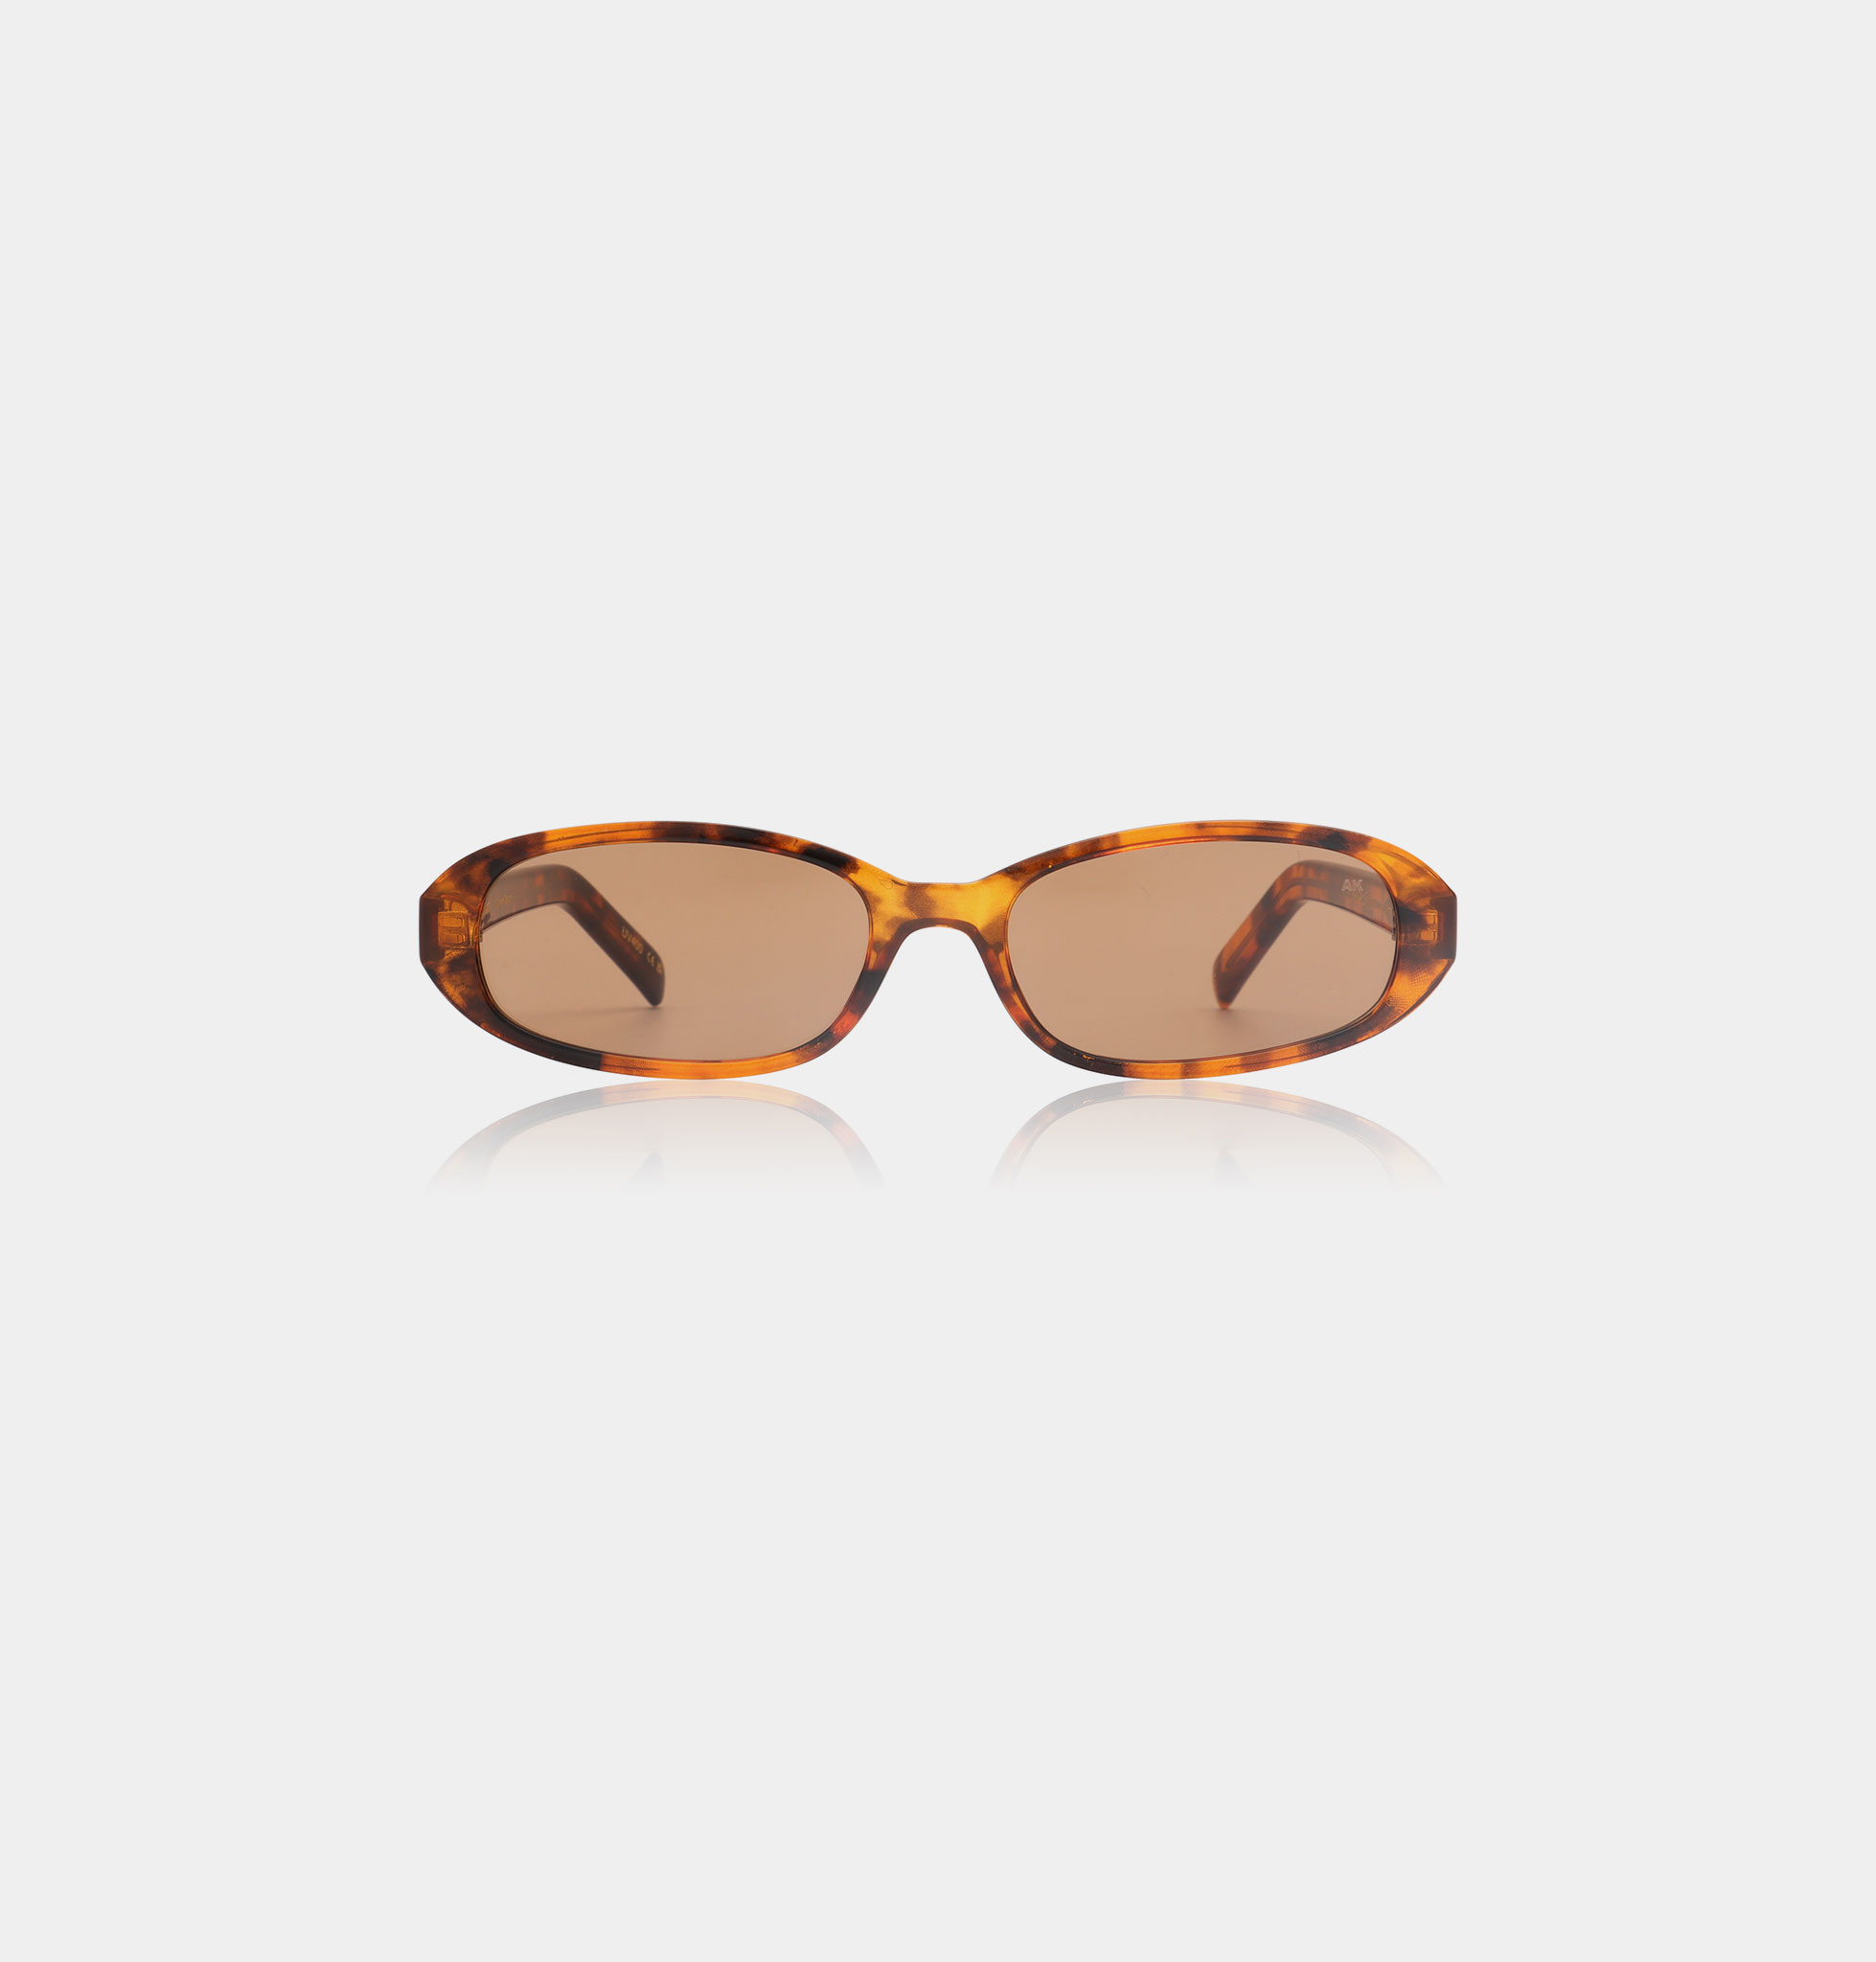 A.Kjaerbede zonnebril model MACY kleur havana met bronze glazen AKsunnies bril sunglasses eyewear